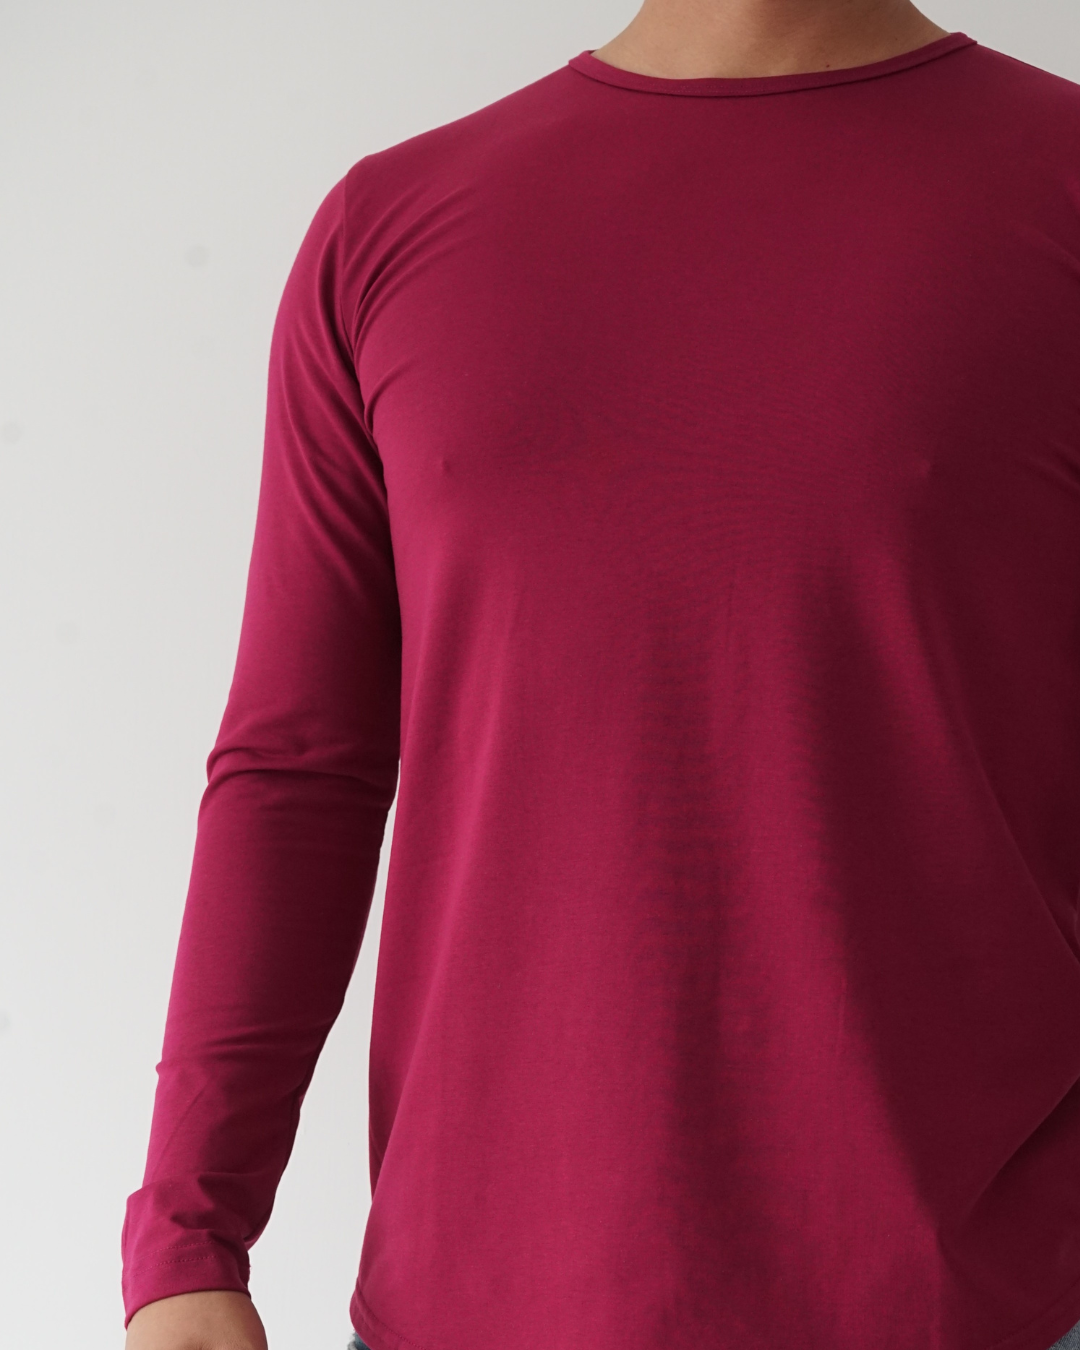 Cherry Wine T-shirt - Long Sleeve Wide Neck Original Bottom